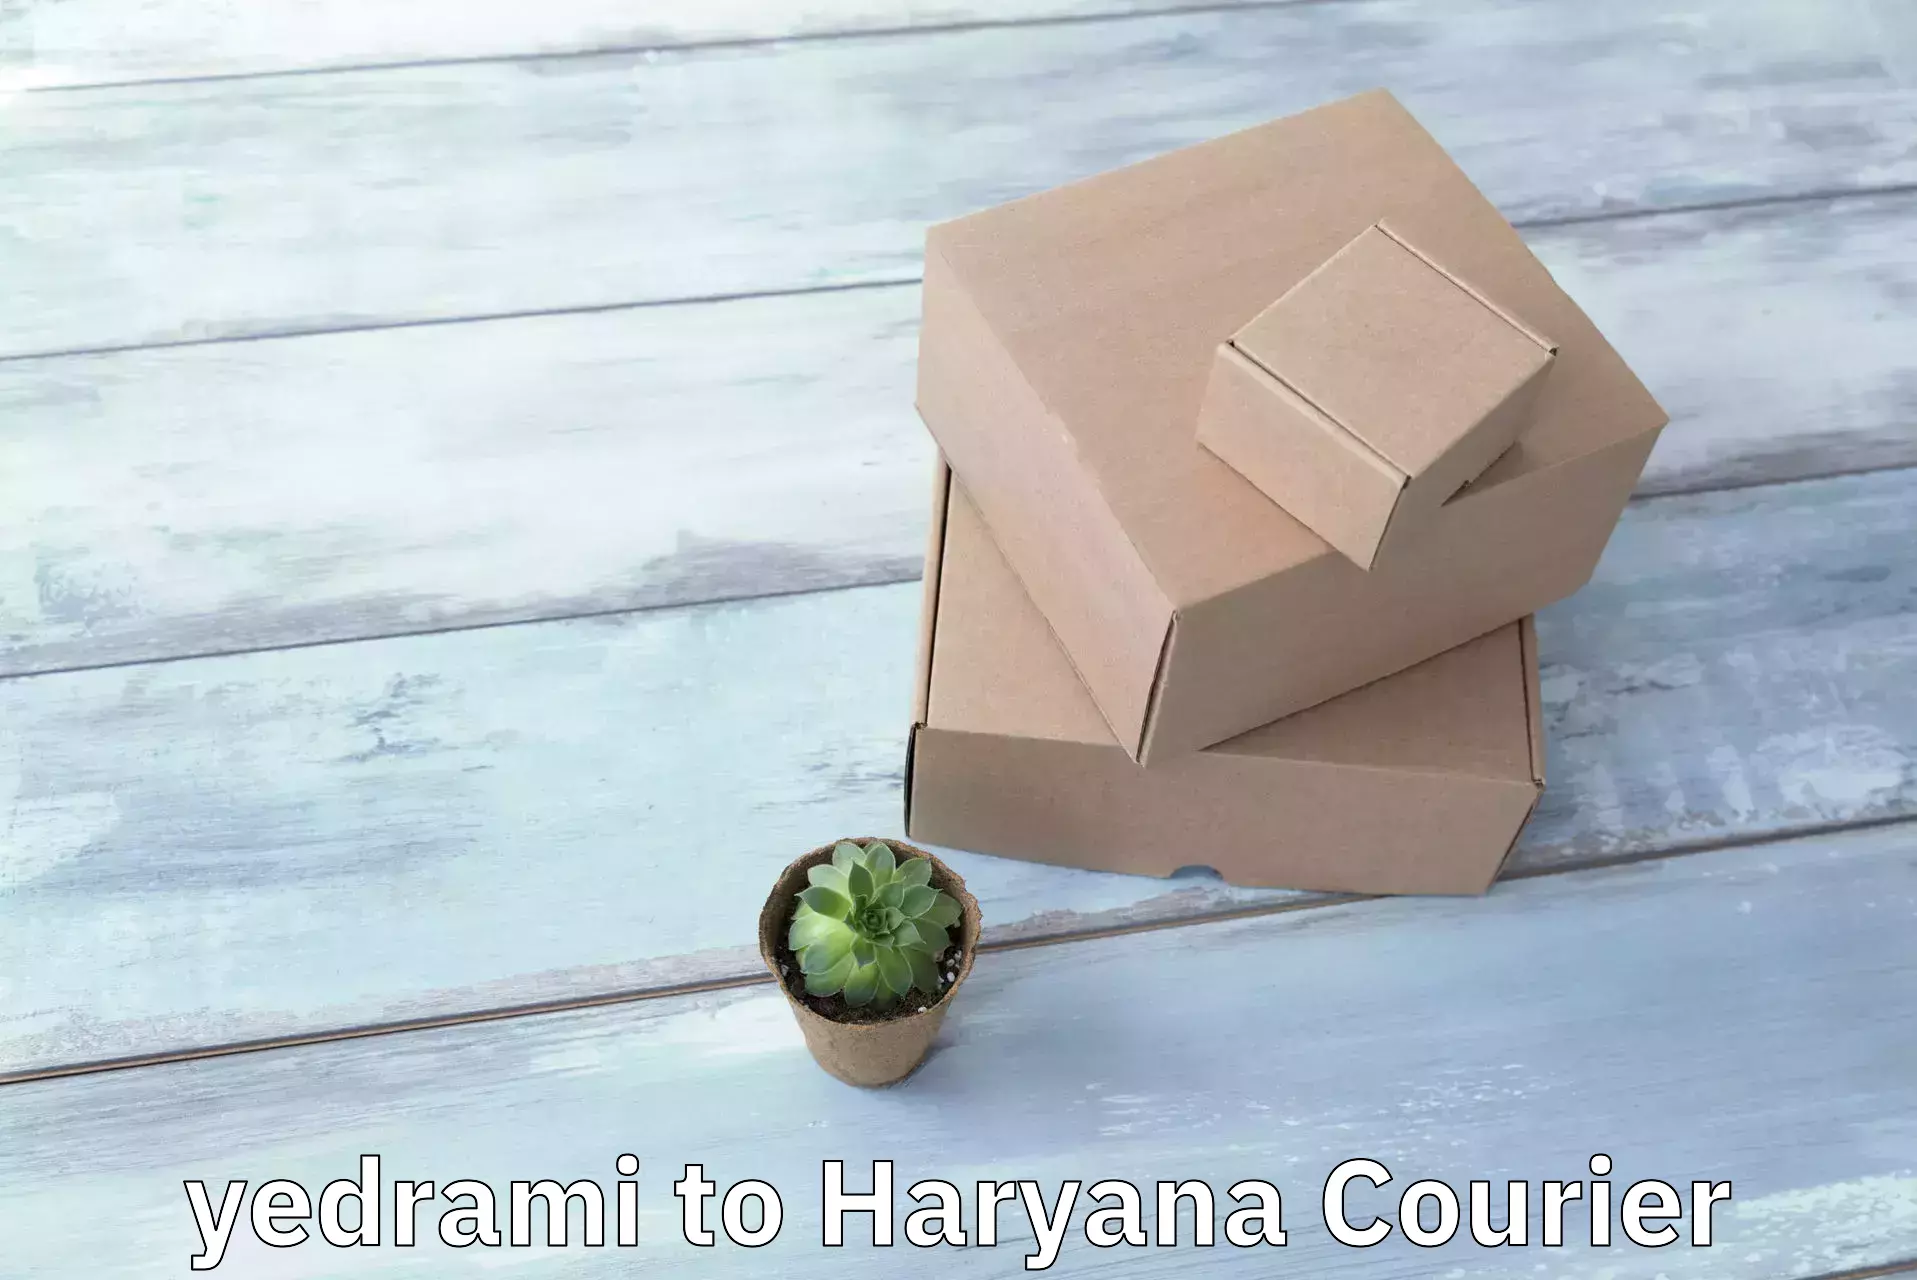 High-capacity shipping options yedrami to NCR Haryana